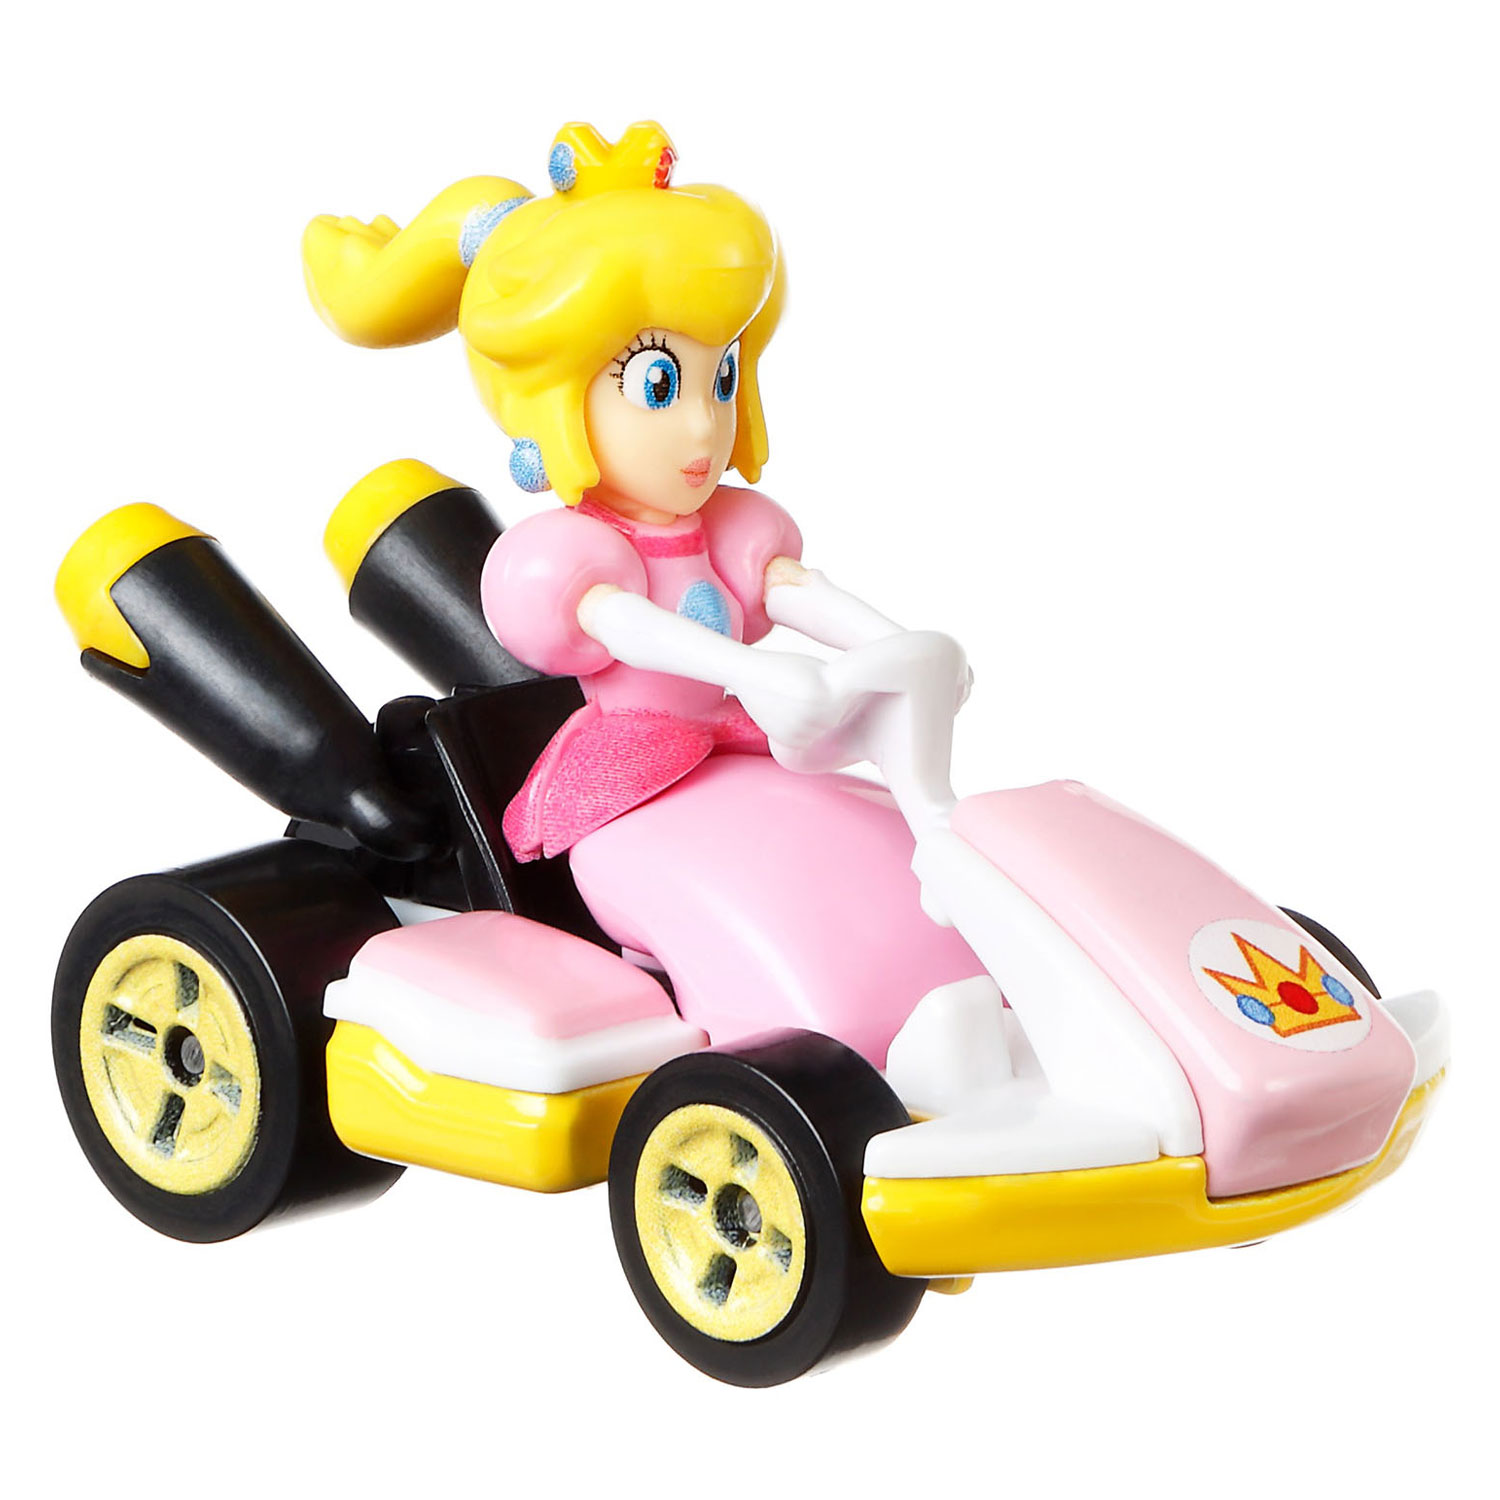 Hot Wheels Mario Kart Fahrzeug – Pfirsich | Thimble Toys